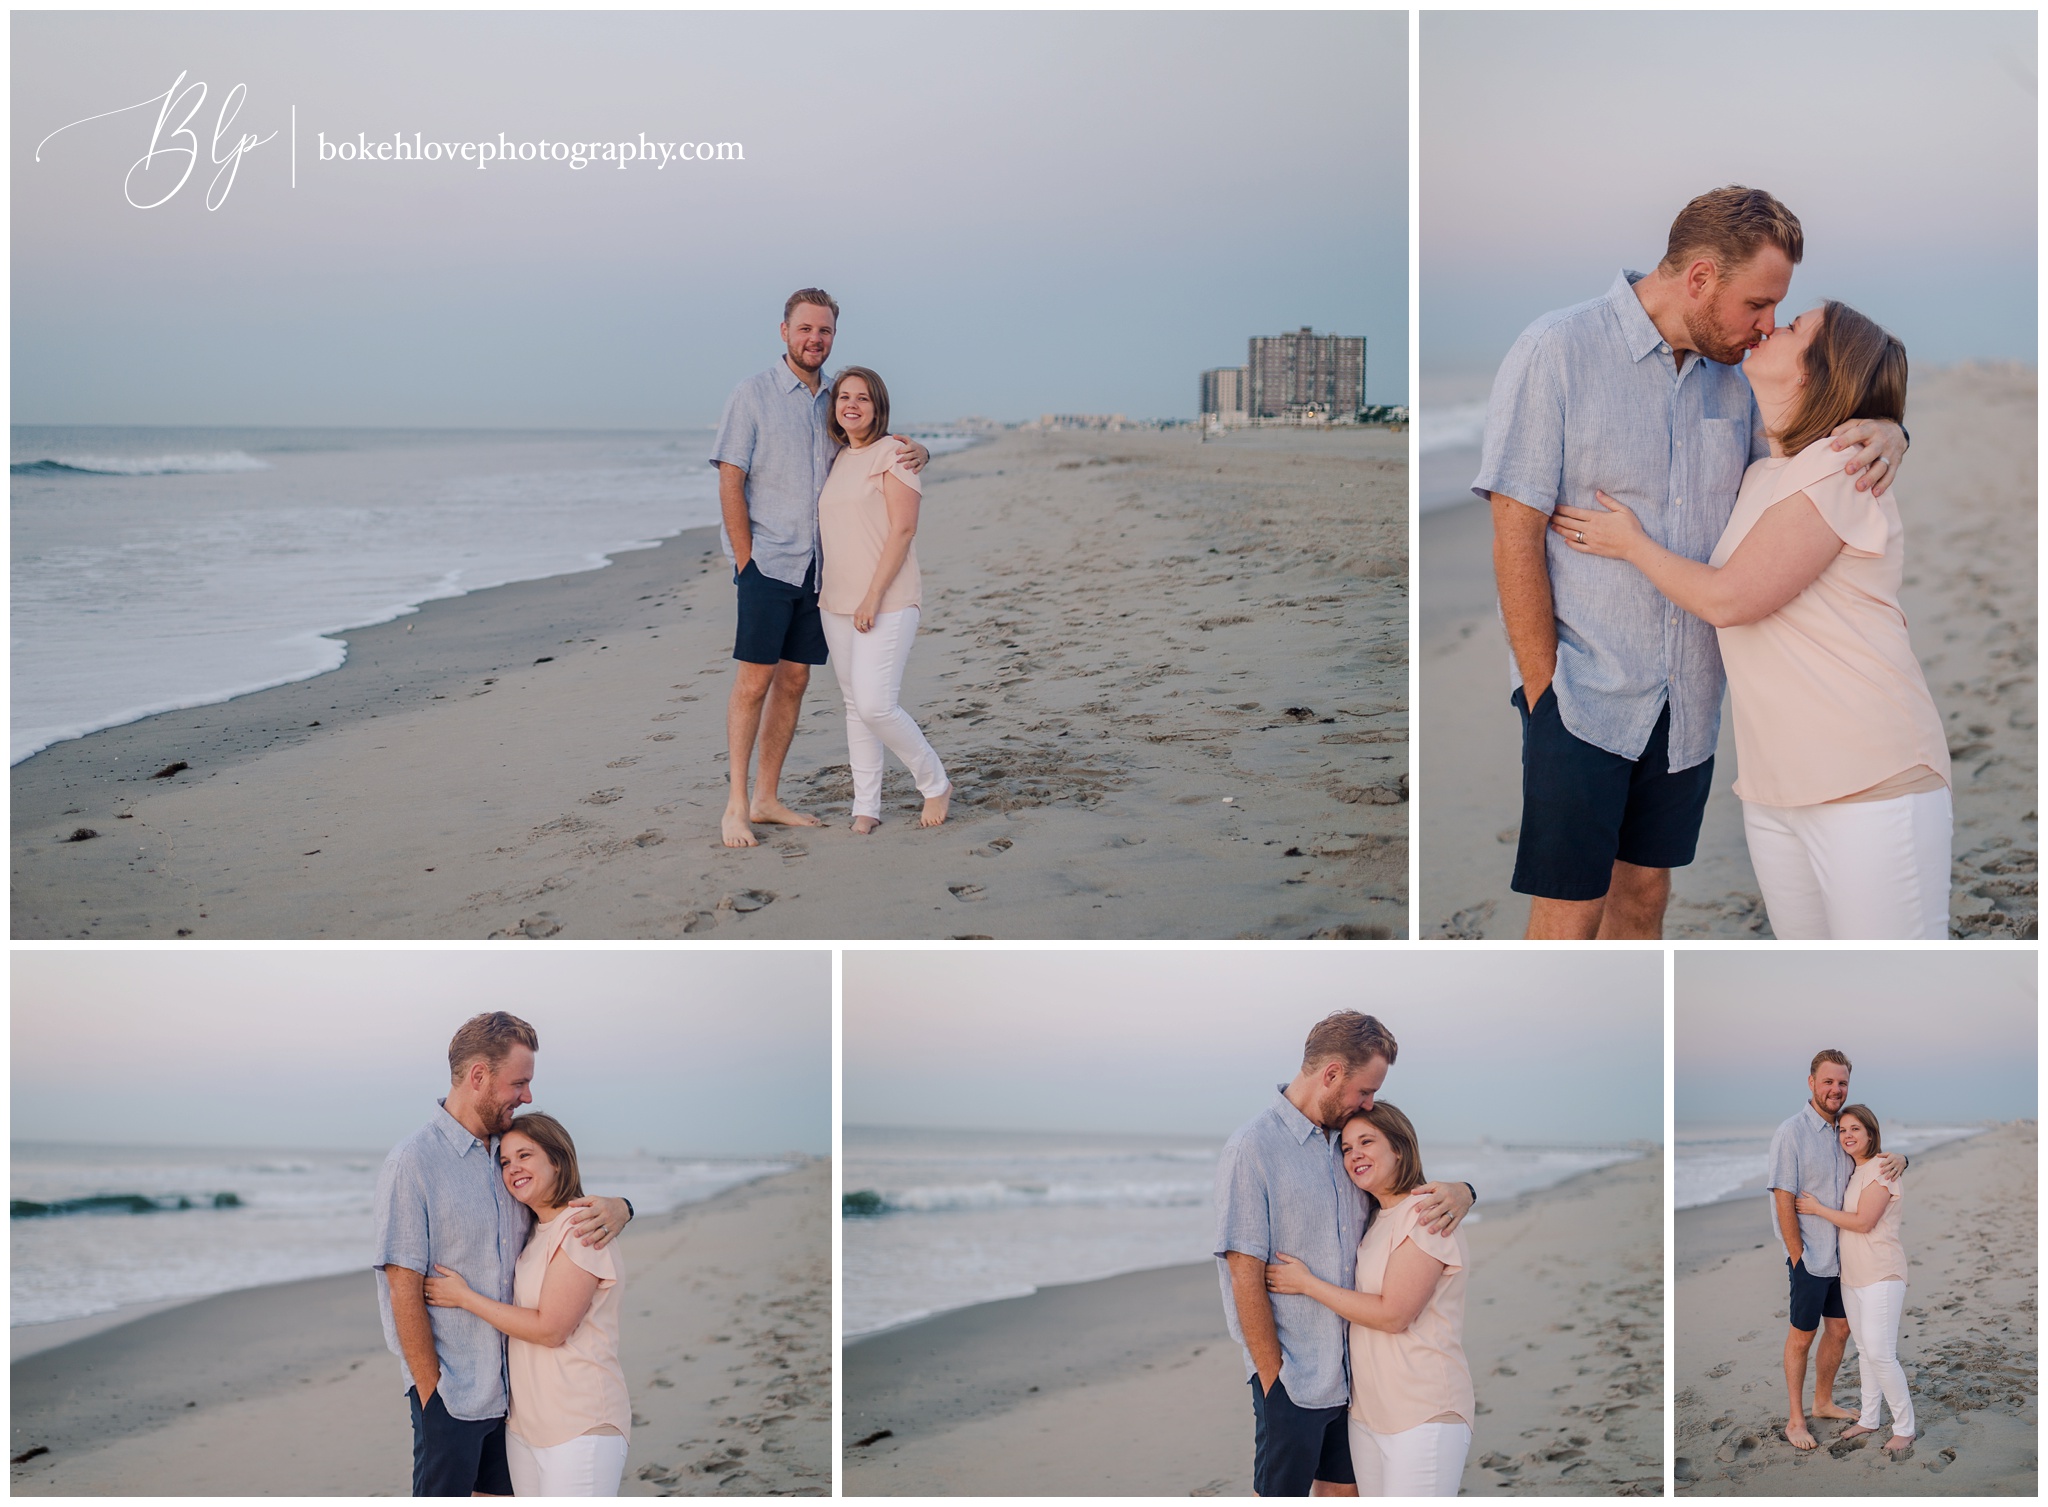 Bokeh Love Photography, NJ Beach Photographer, South Jersey Beach Photographer, Jersey Shore Beach Photographer, Jersey Shore Beach Portraits